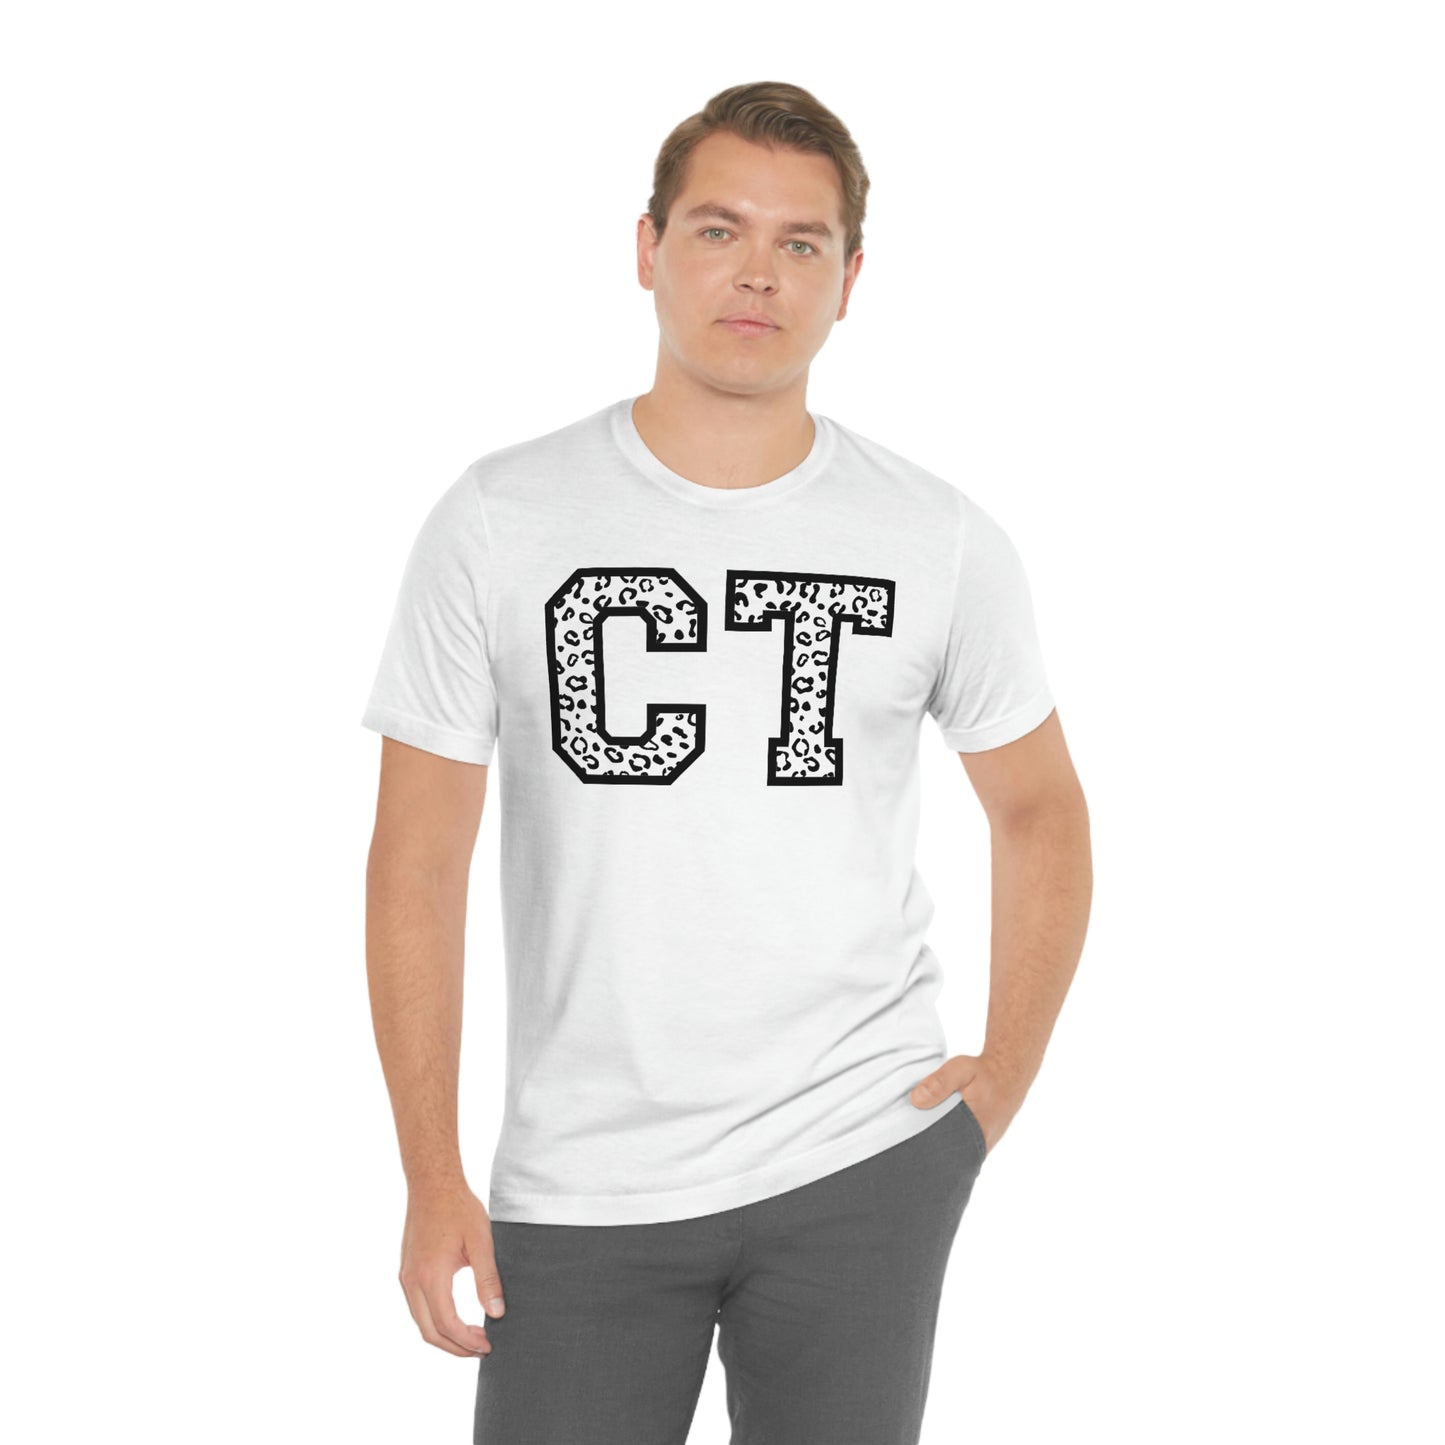 Connecticut CT Leopard Print Short Sleeve  T-shirt